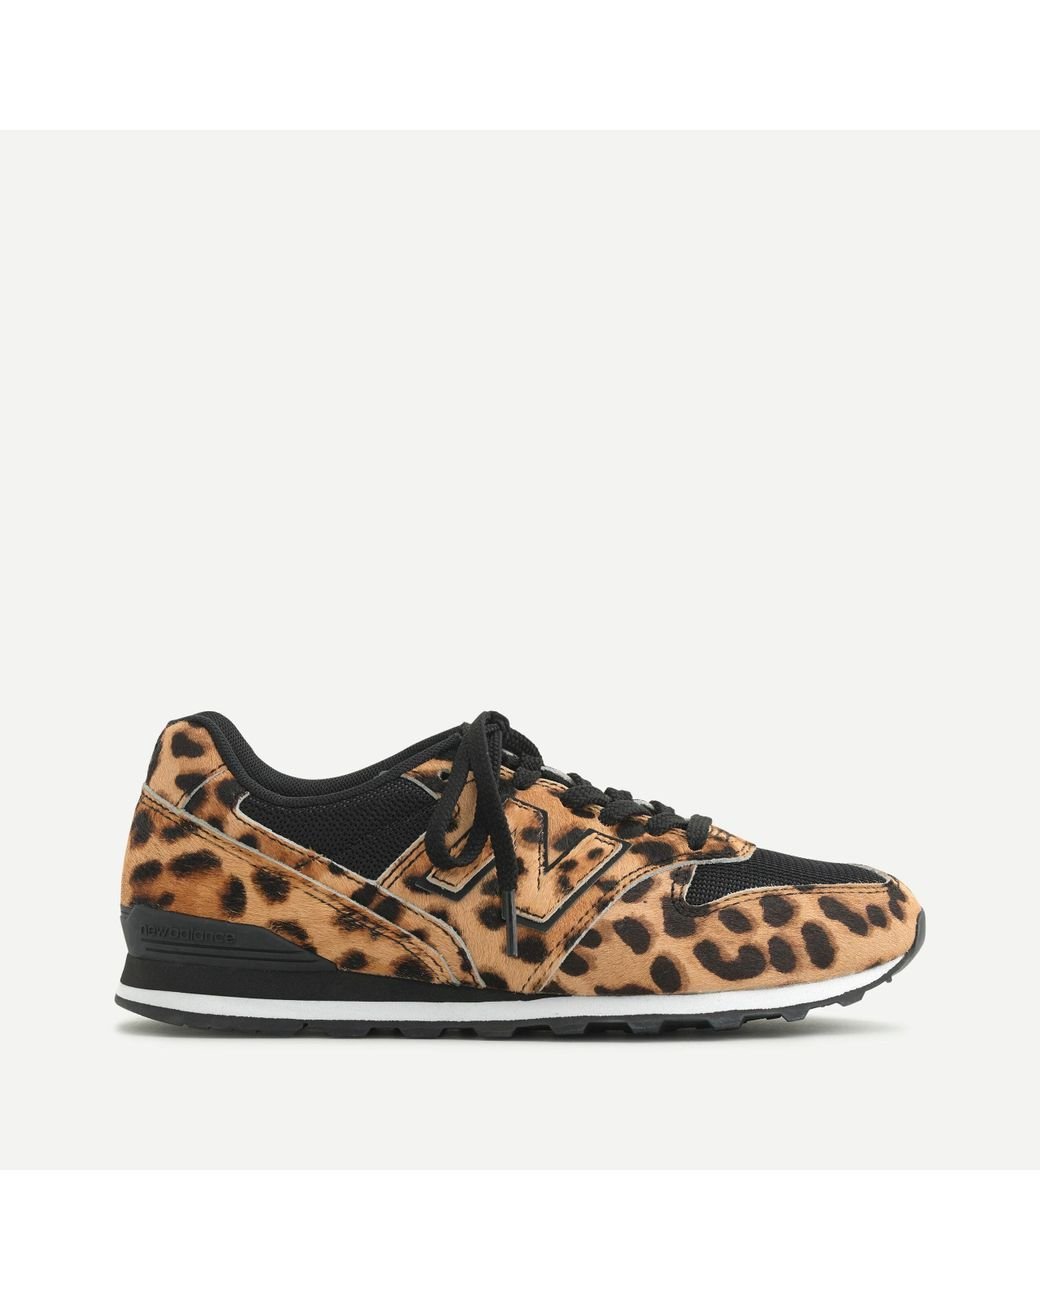 j crew leopard sneakers